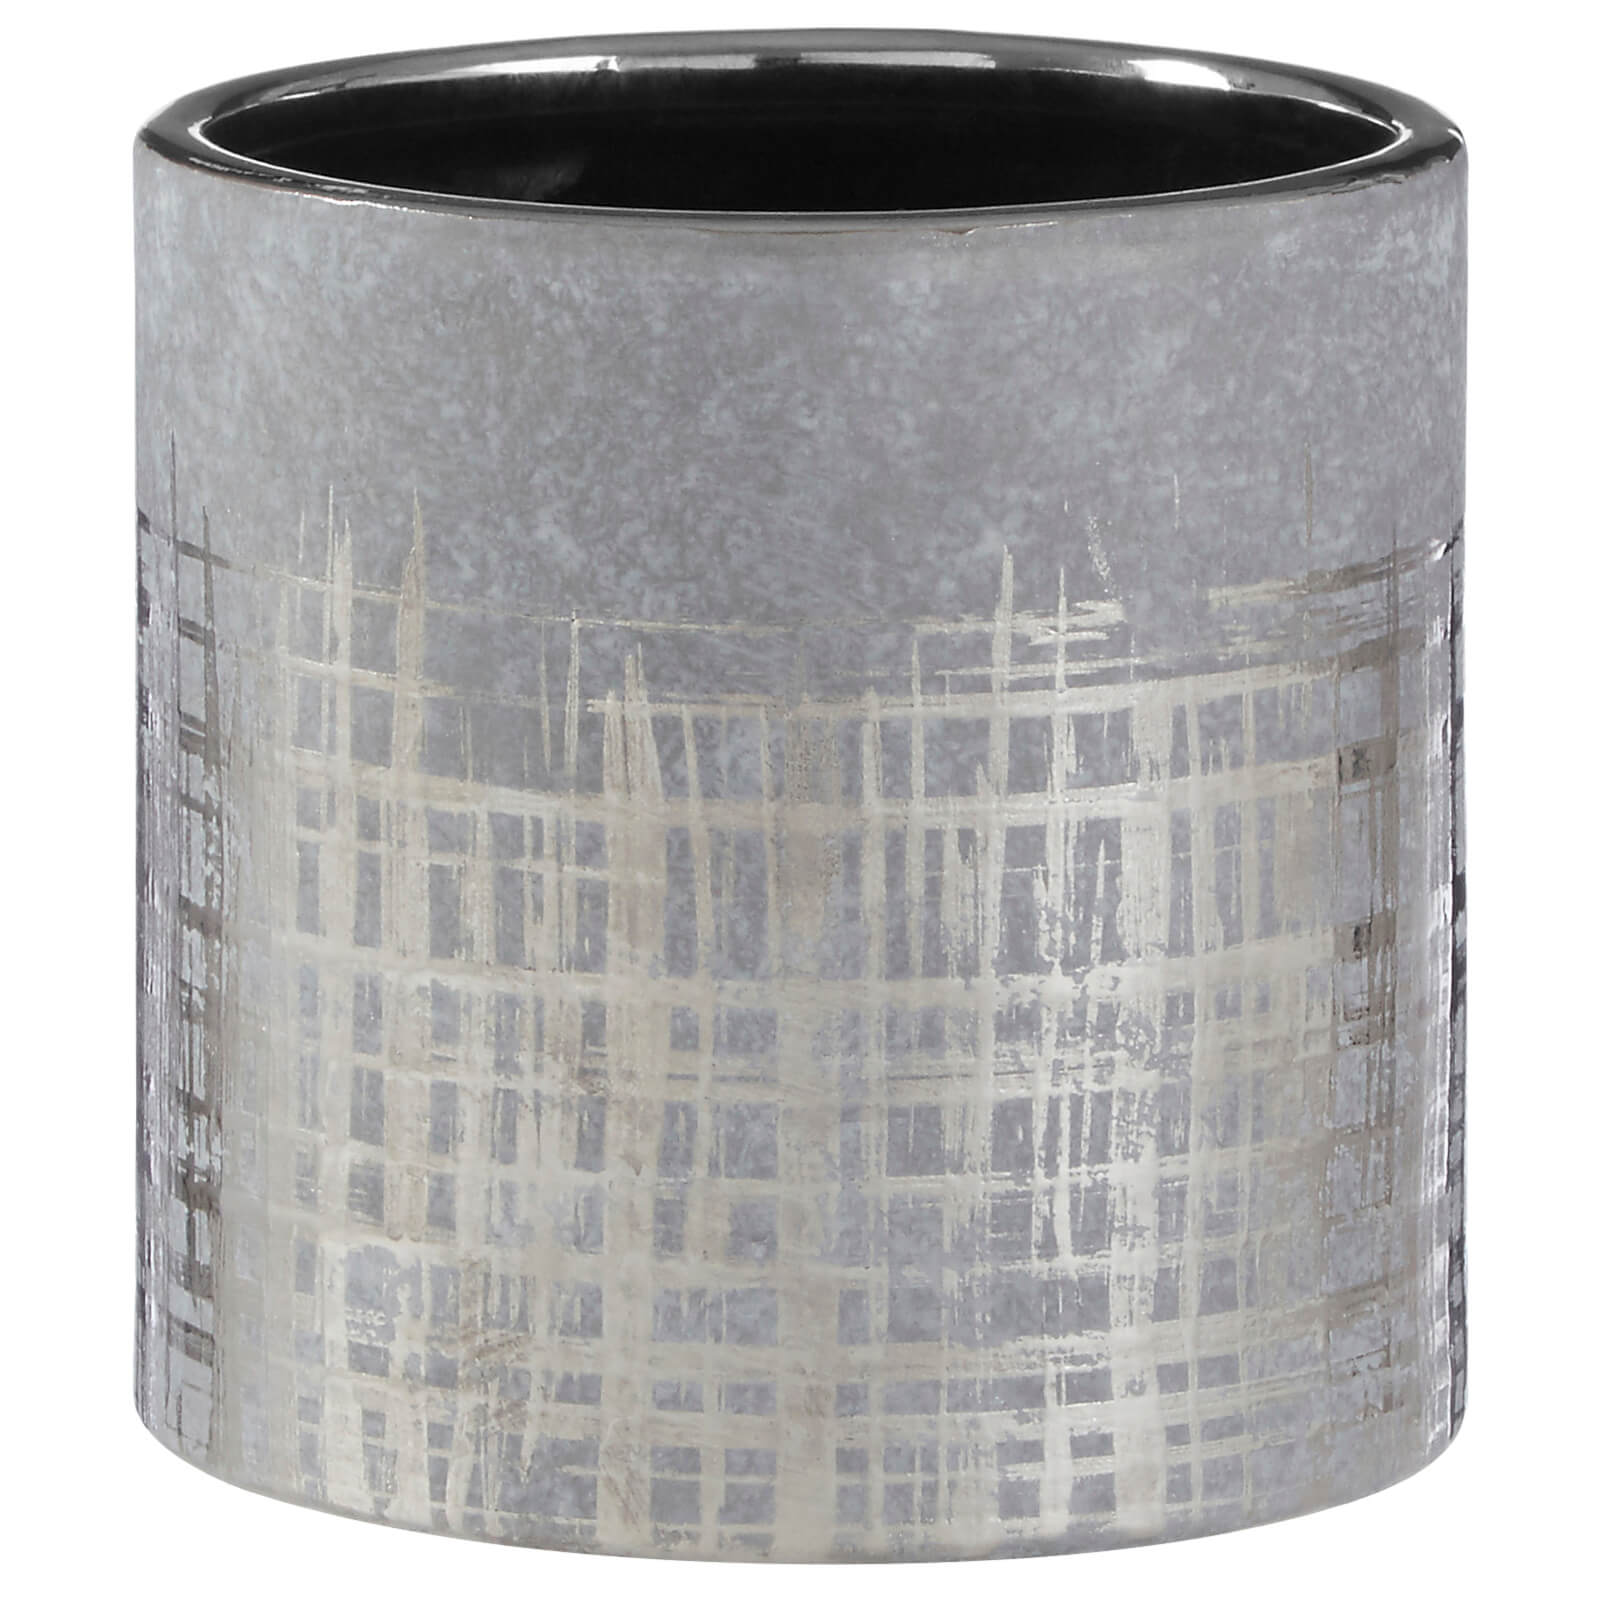 Image of Embra Ceramic Planter - Grey/Silver